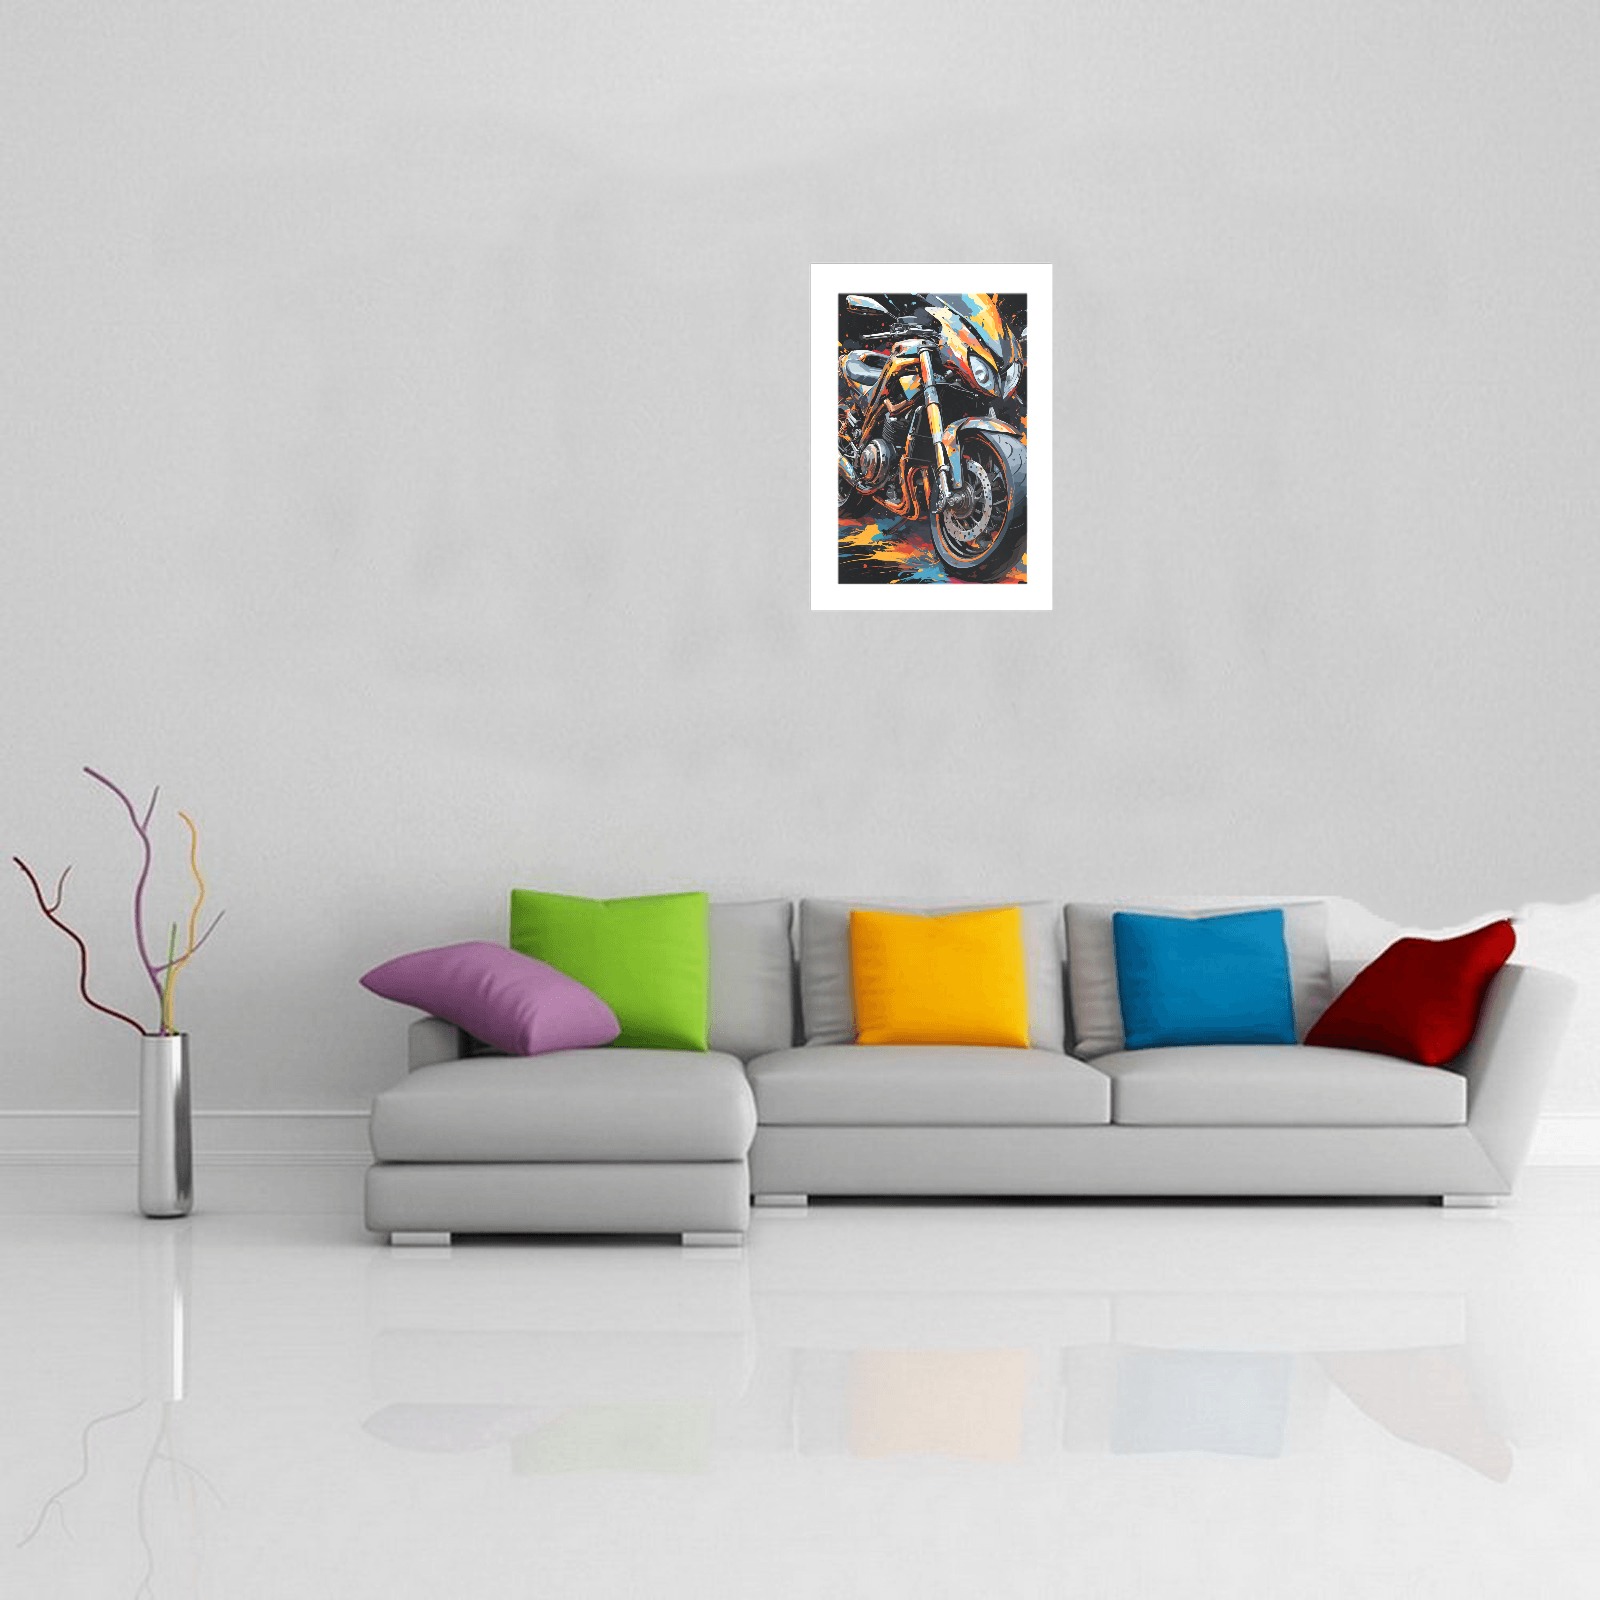 Powerful motorcycle, colorful bike fantasy art Art Print 19‘’x28‘’